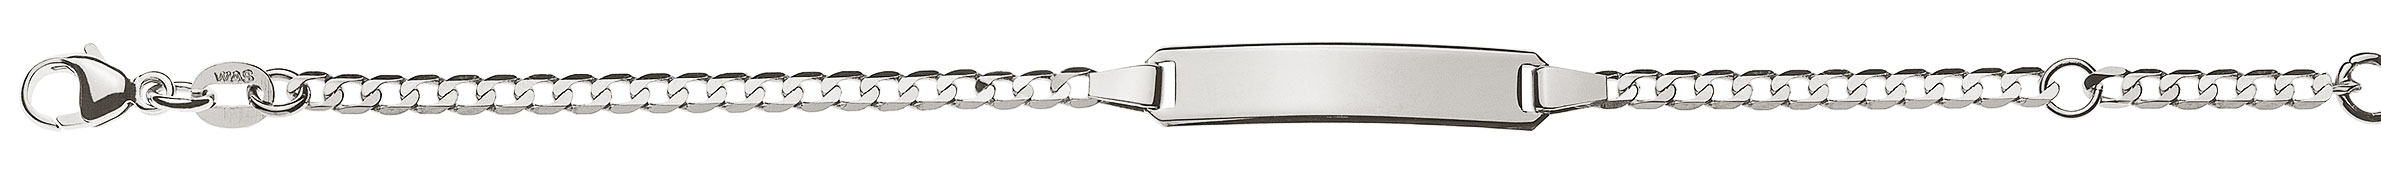 AURONOS Prestige ID bracelet 18k white gold diamond-plated curb chain 18cm